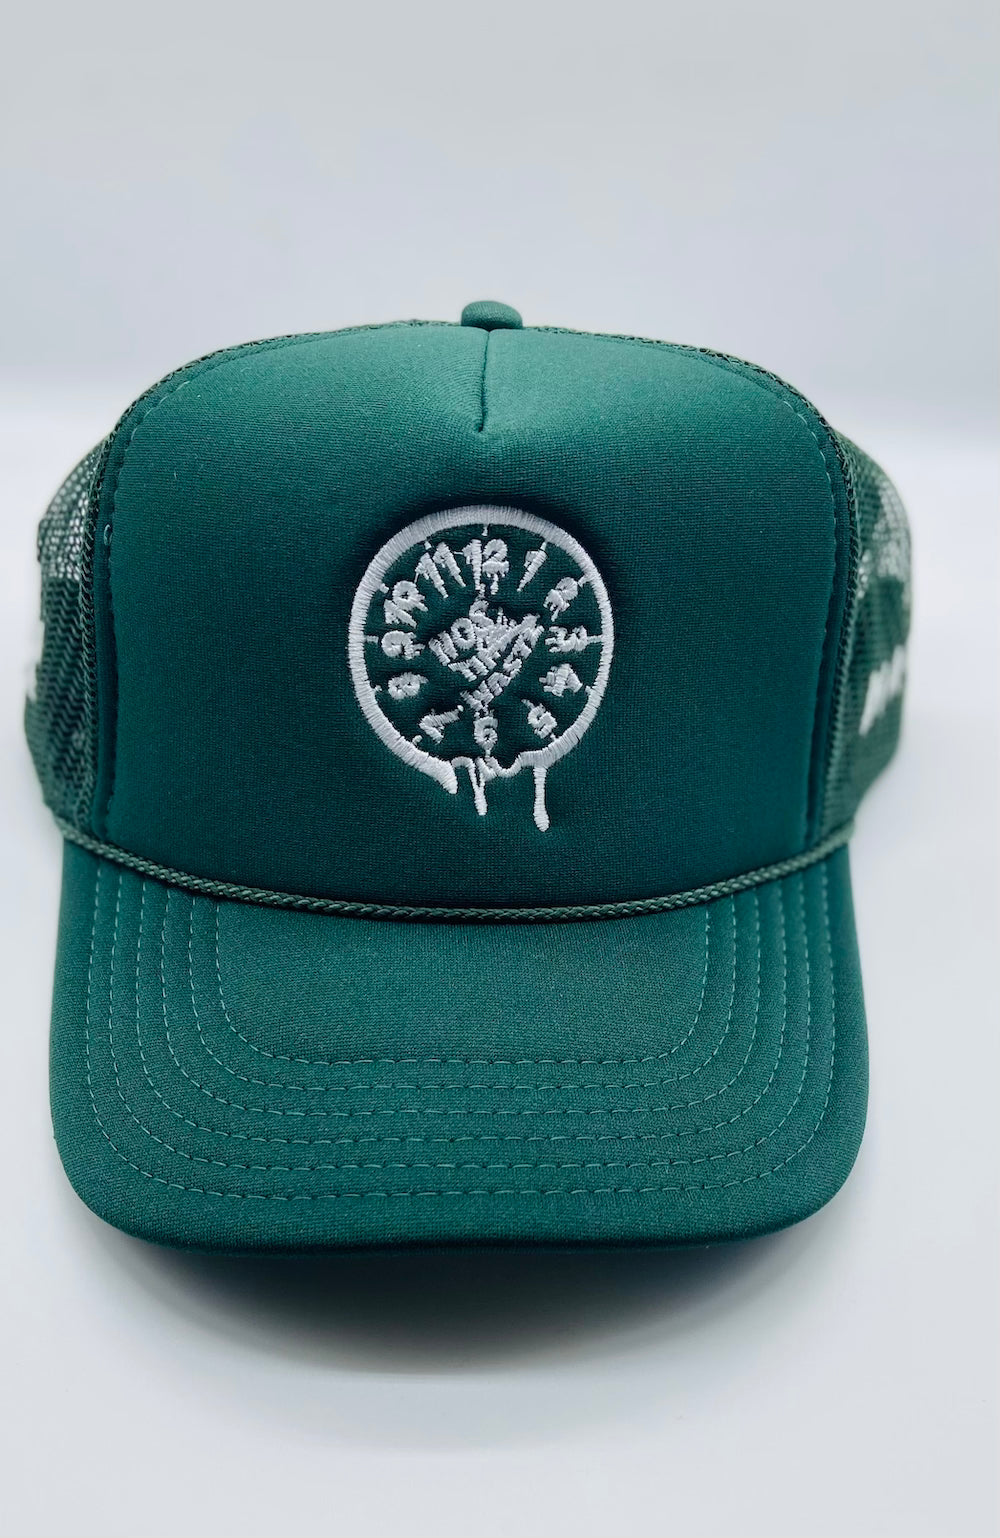 Forrest green  Trucker hat